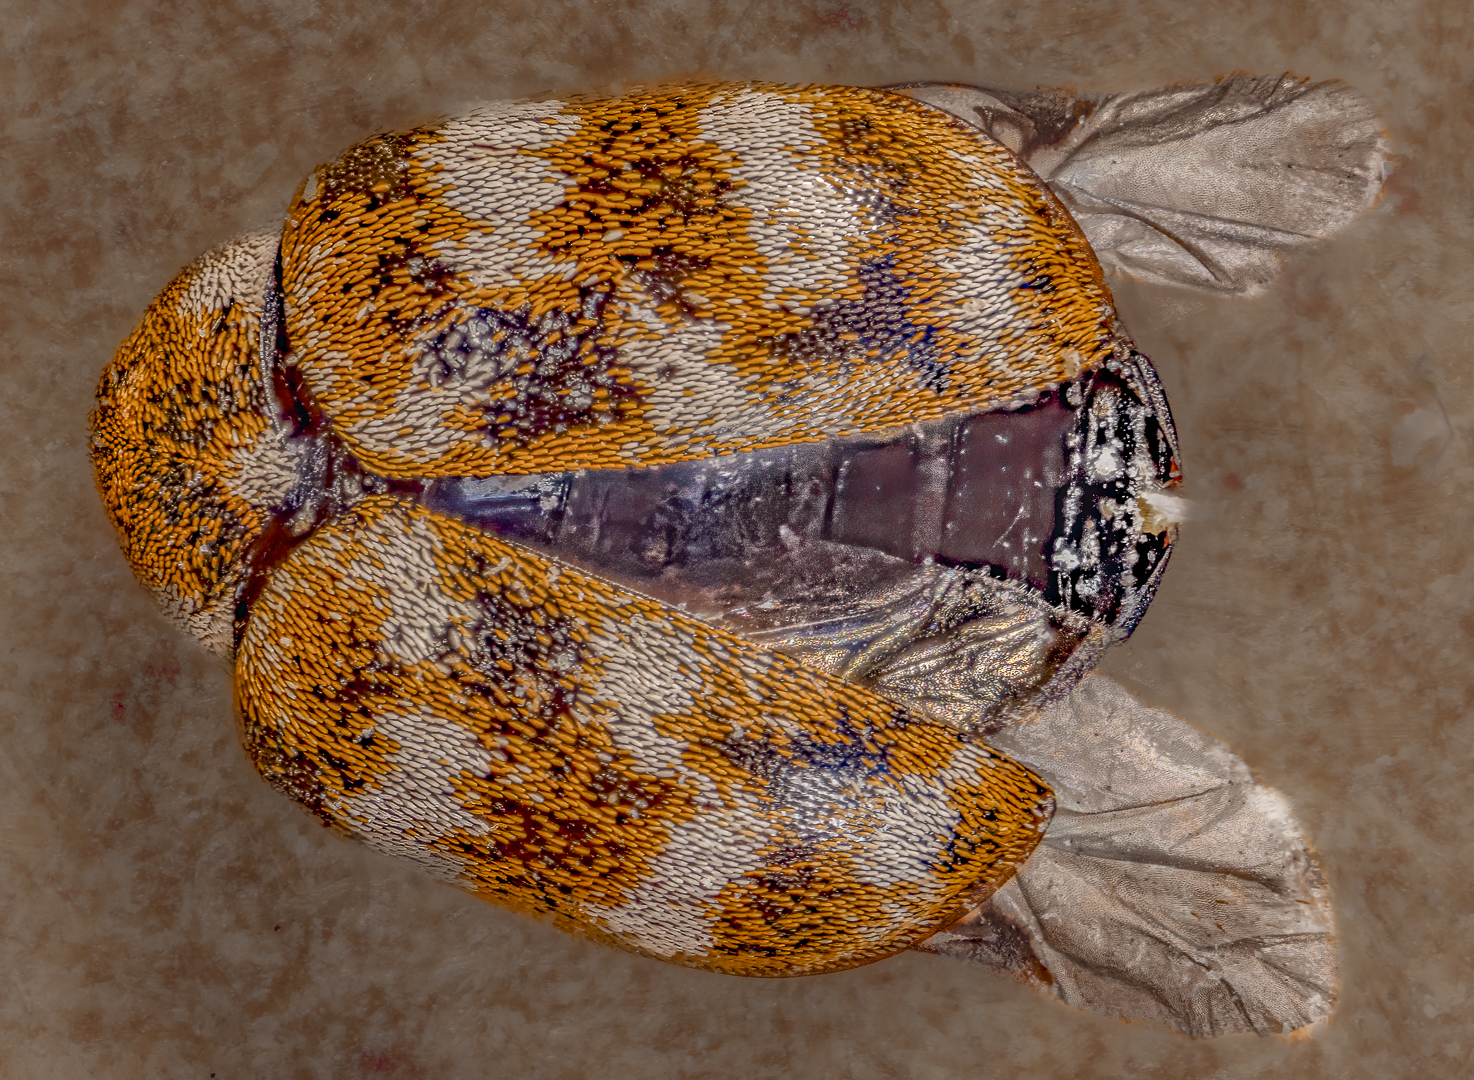 Carpet beetle